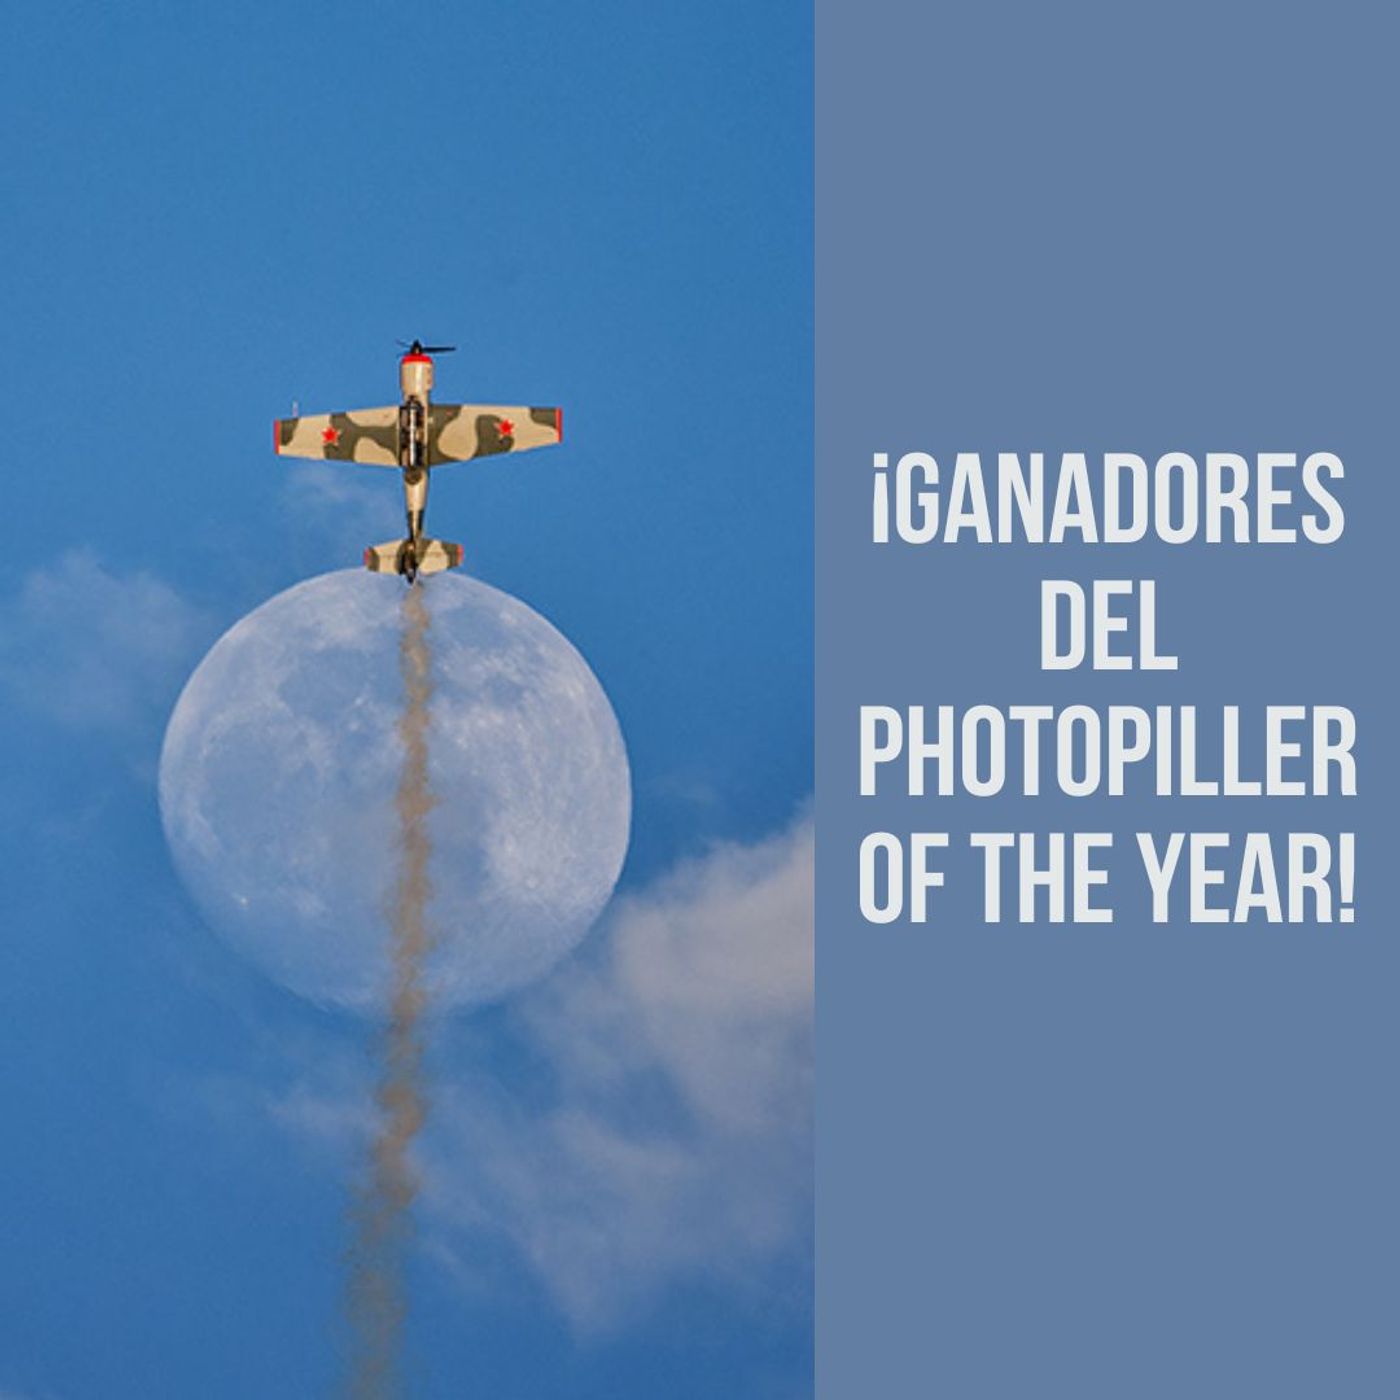 ¡Ganadores del Photopiller of the Year!